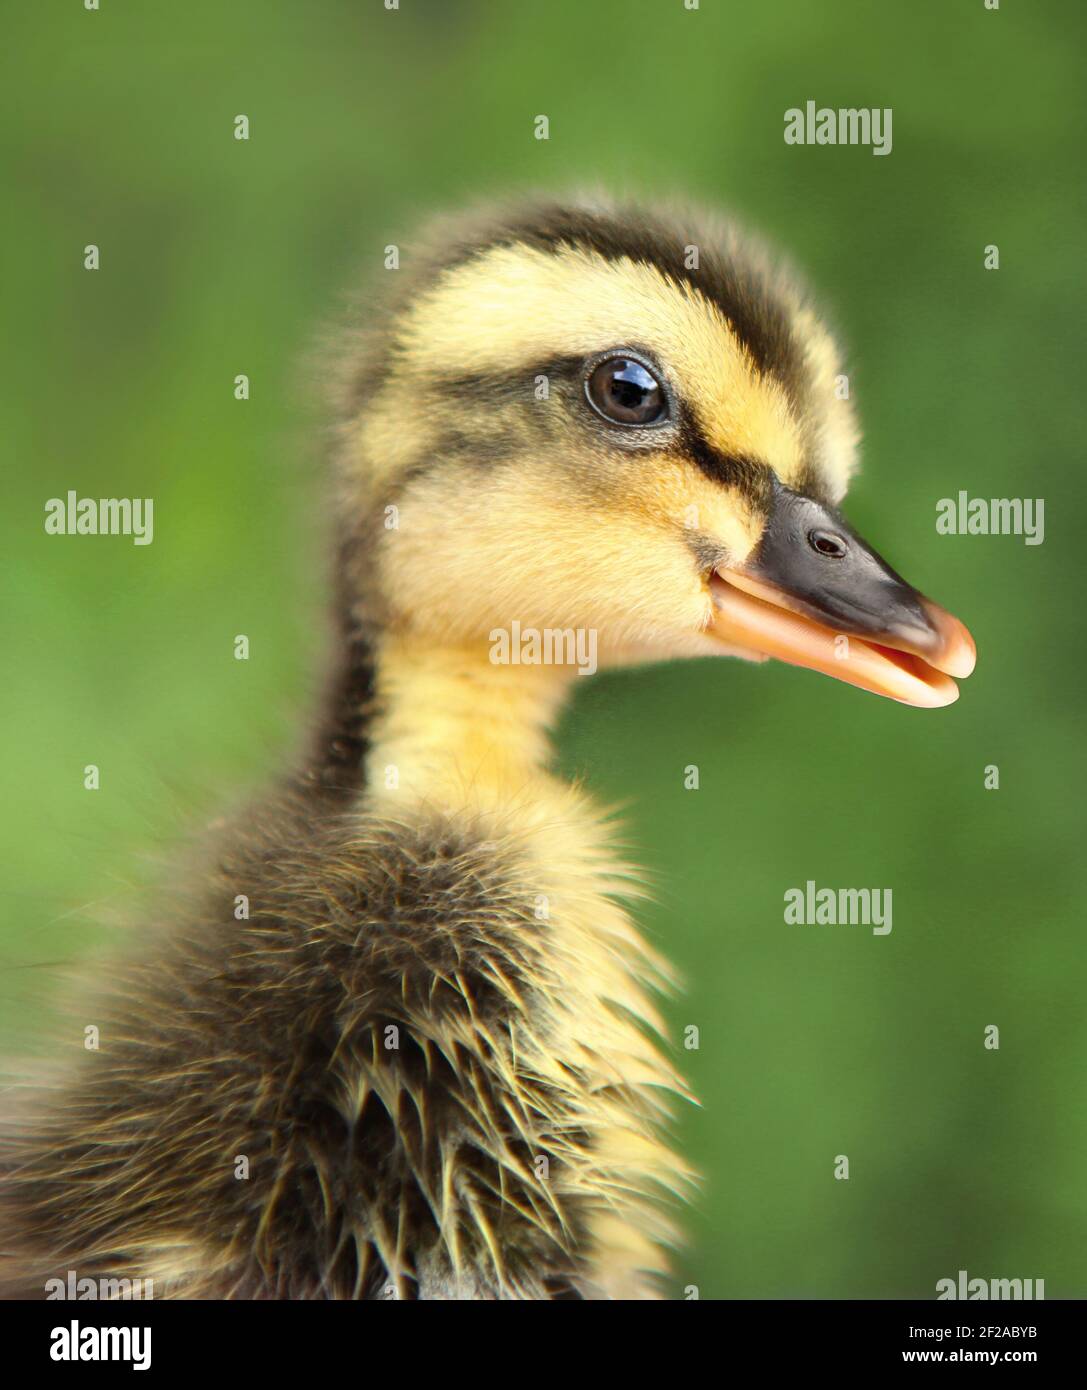 Newborn duckling portrait. Curious duckling. Humorous duckling. Cute pets. Anas platyrhynchos domesticus. Portrait of newborn cute duckling. Stock Photo